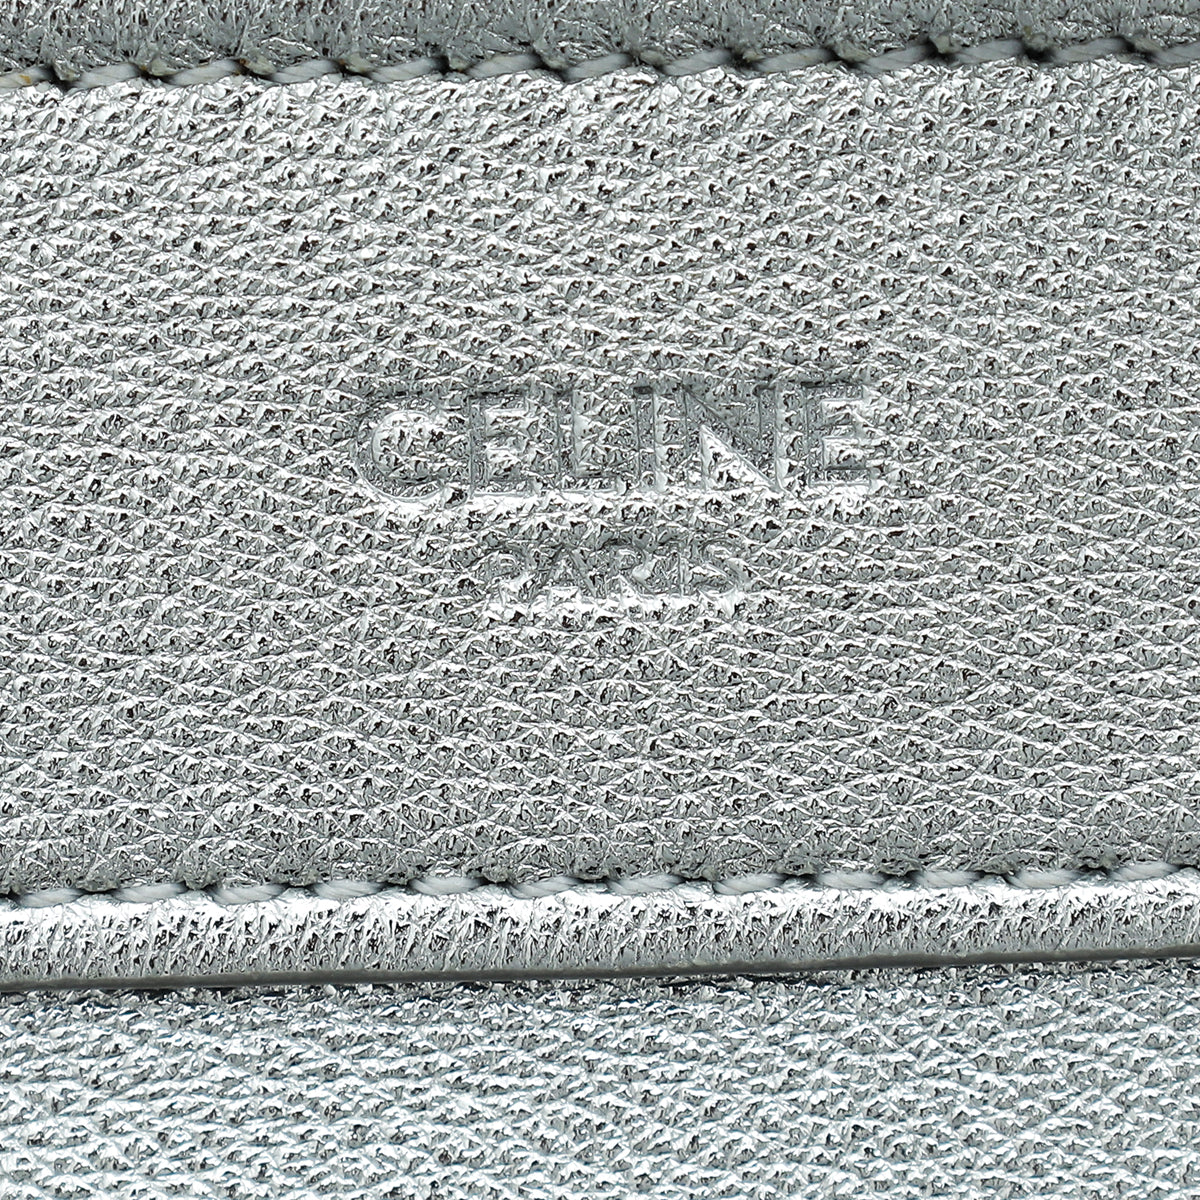 Celine Silver Laminated Nano Luggage Bag